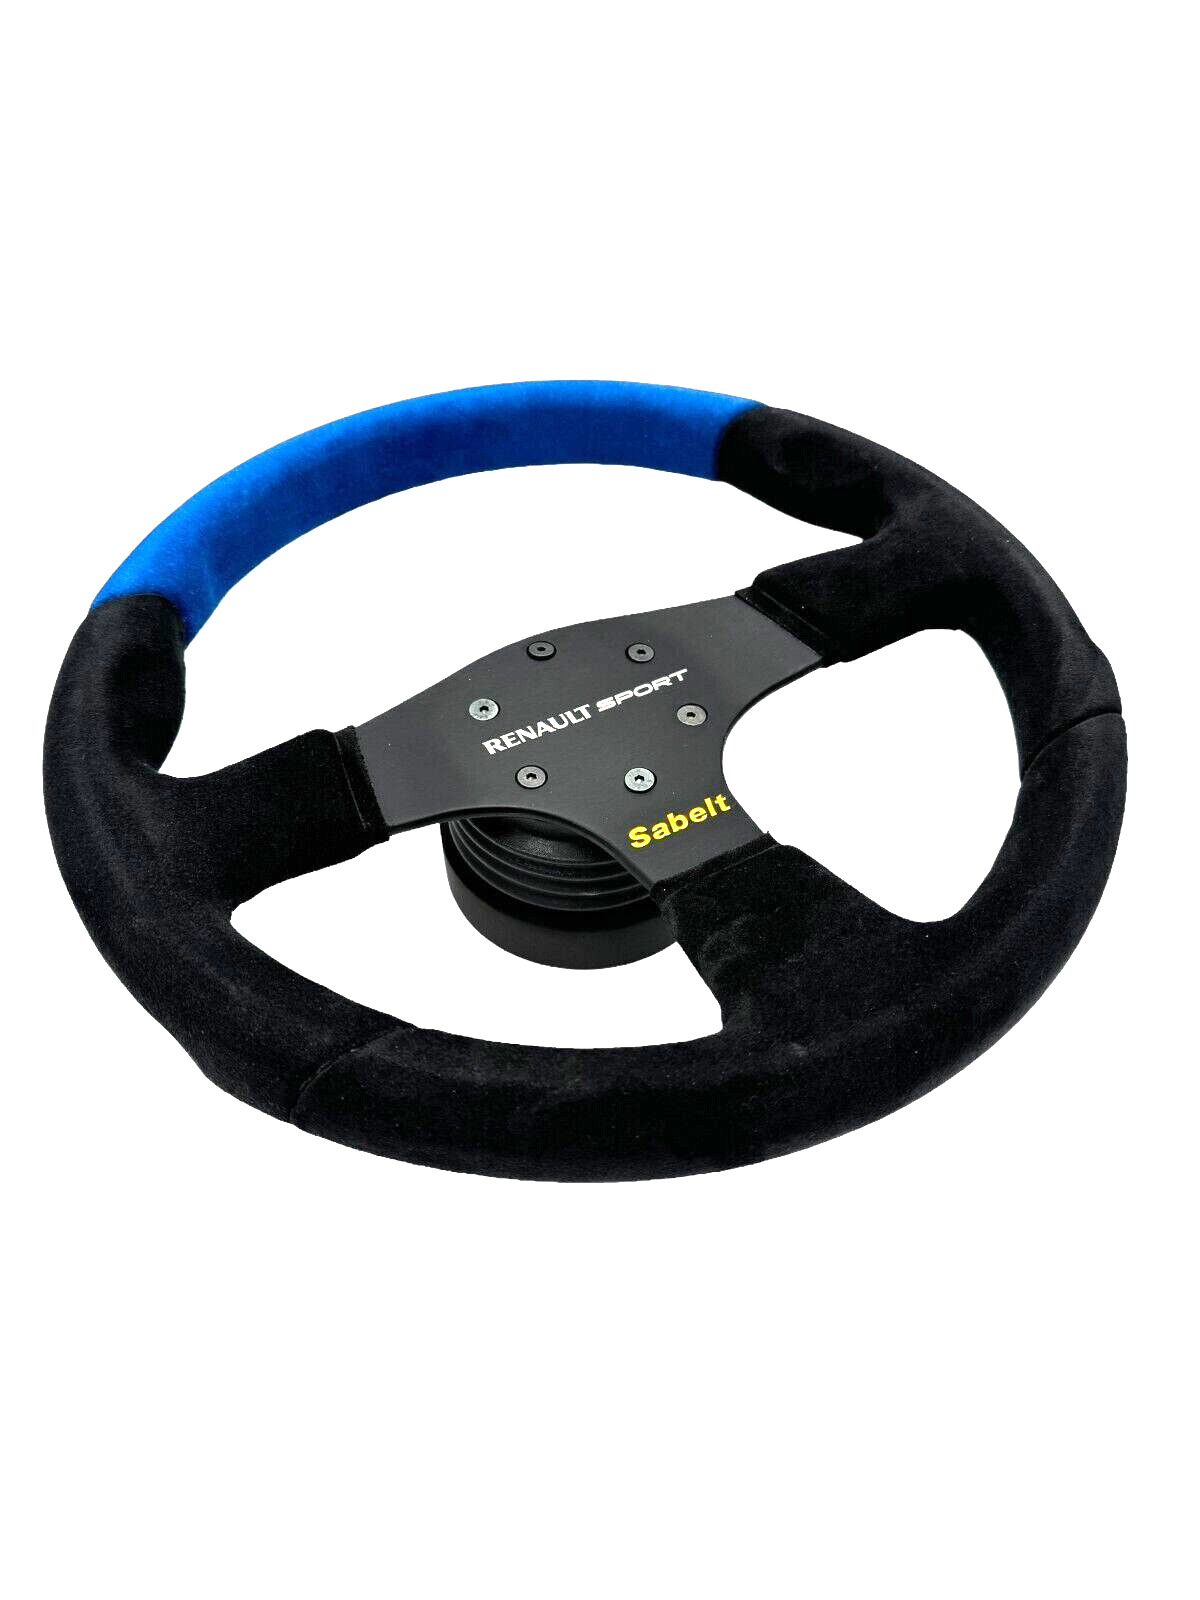 Renault Clio RS Sabelt Renault Sport Racing Steering Wheel 330mm Alcantara